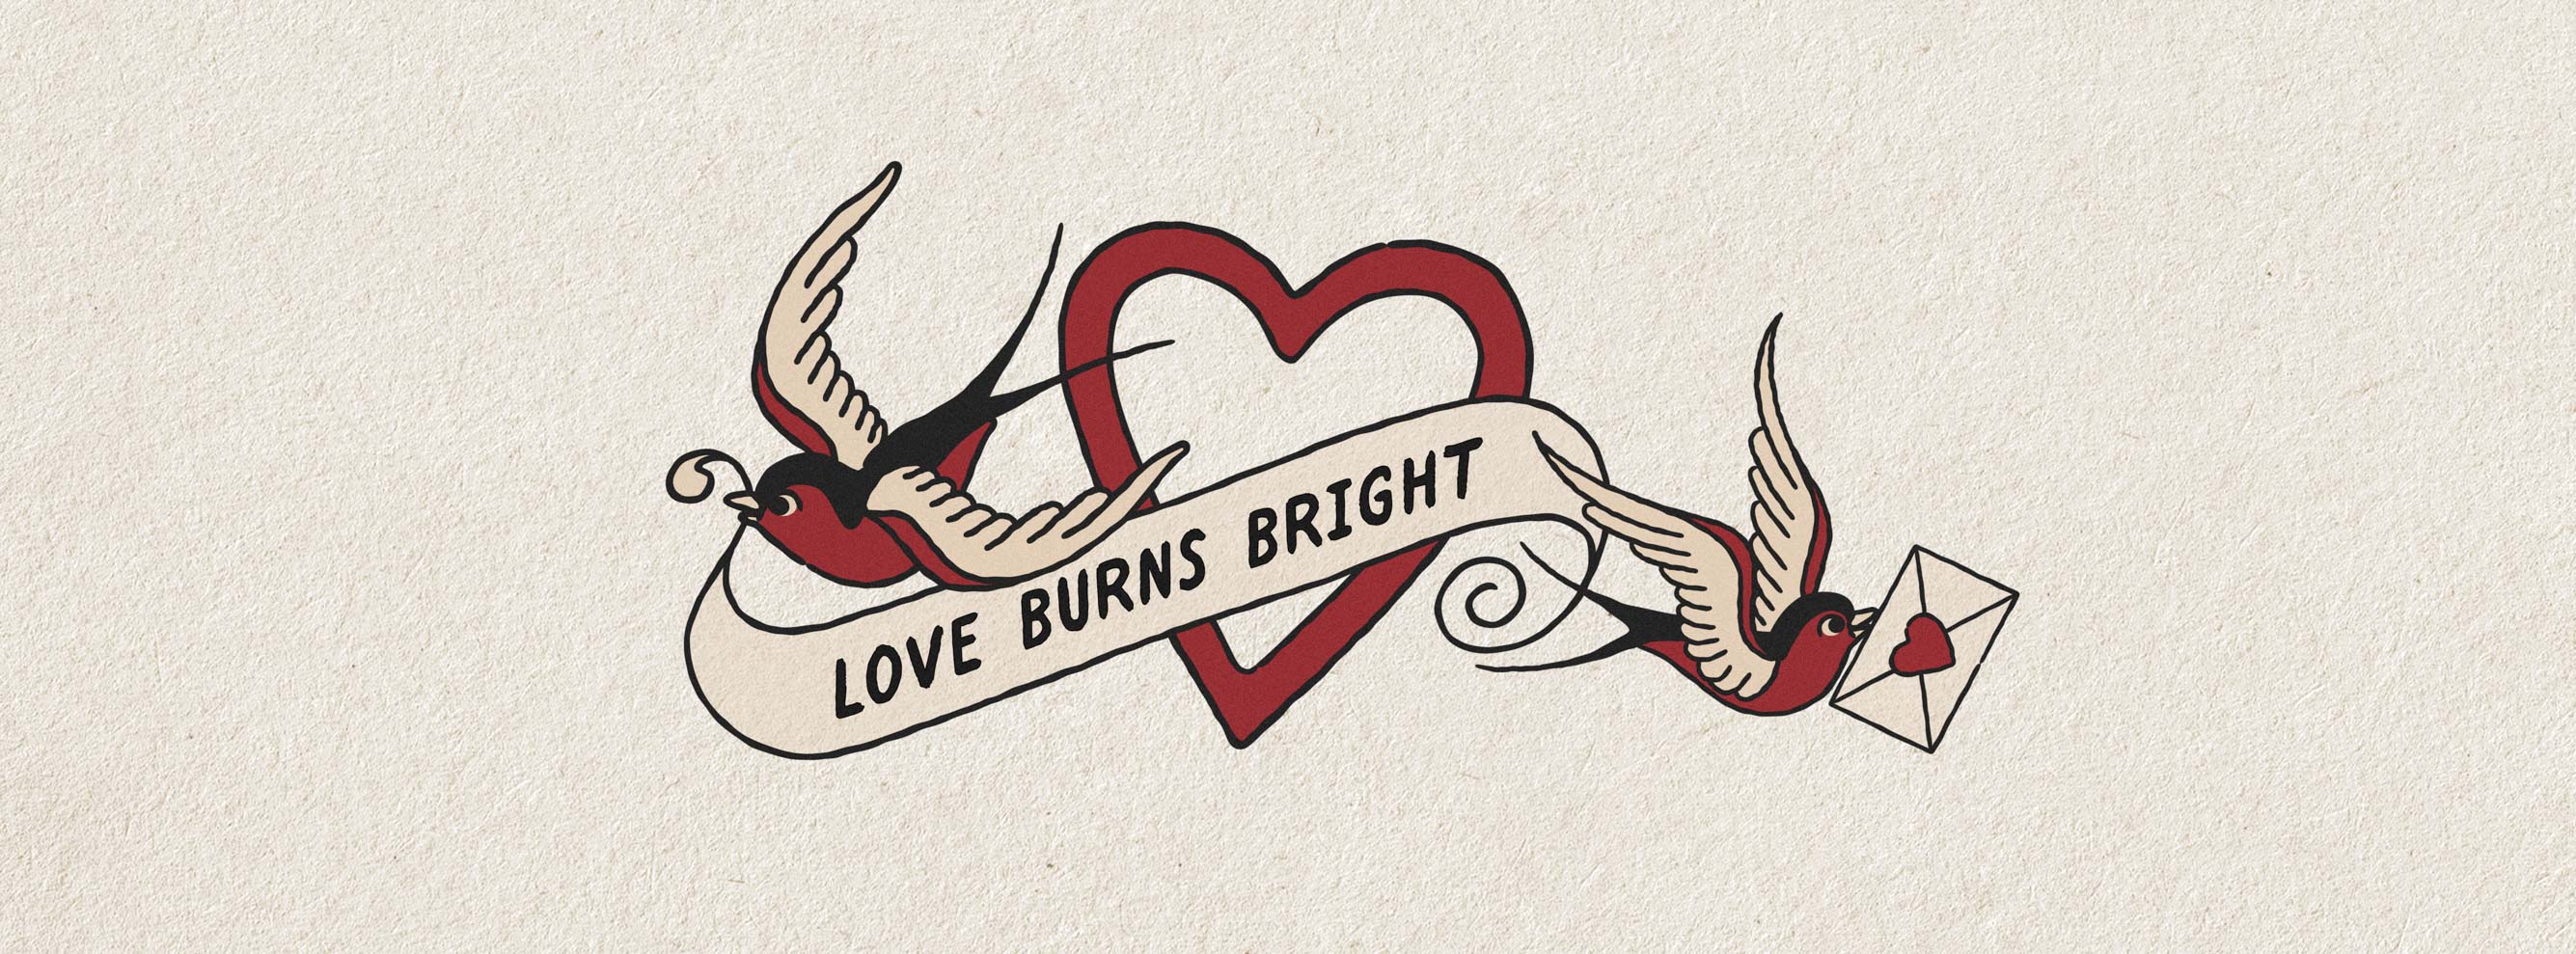 LOVE BURNS BRIGHT